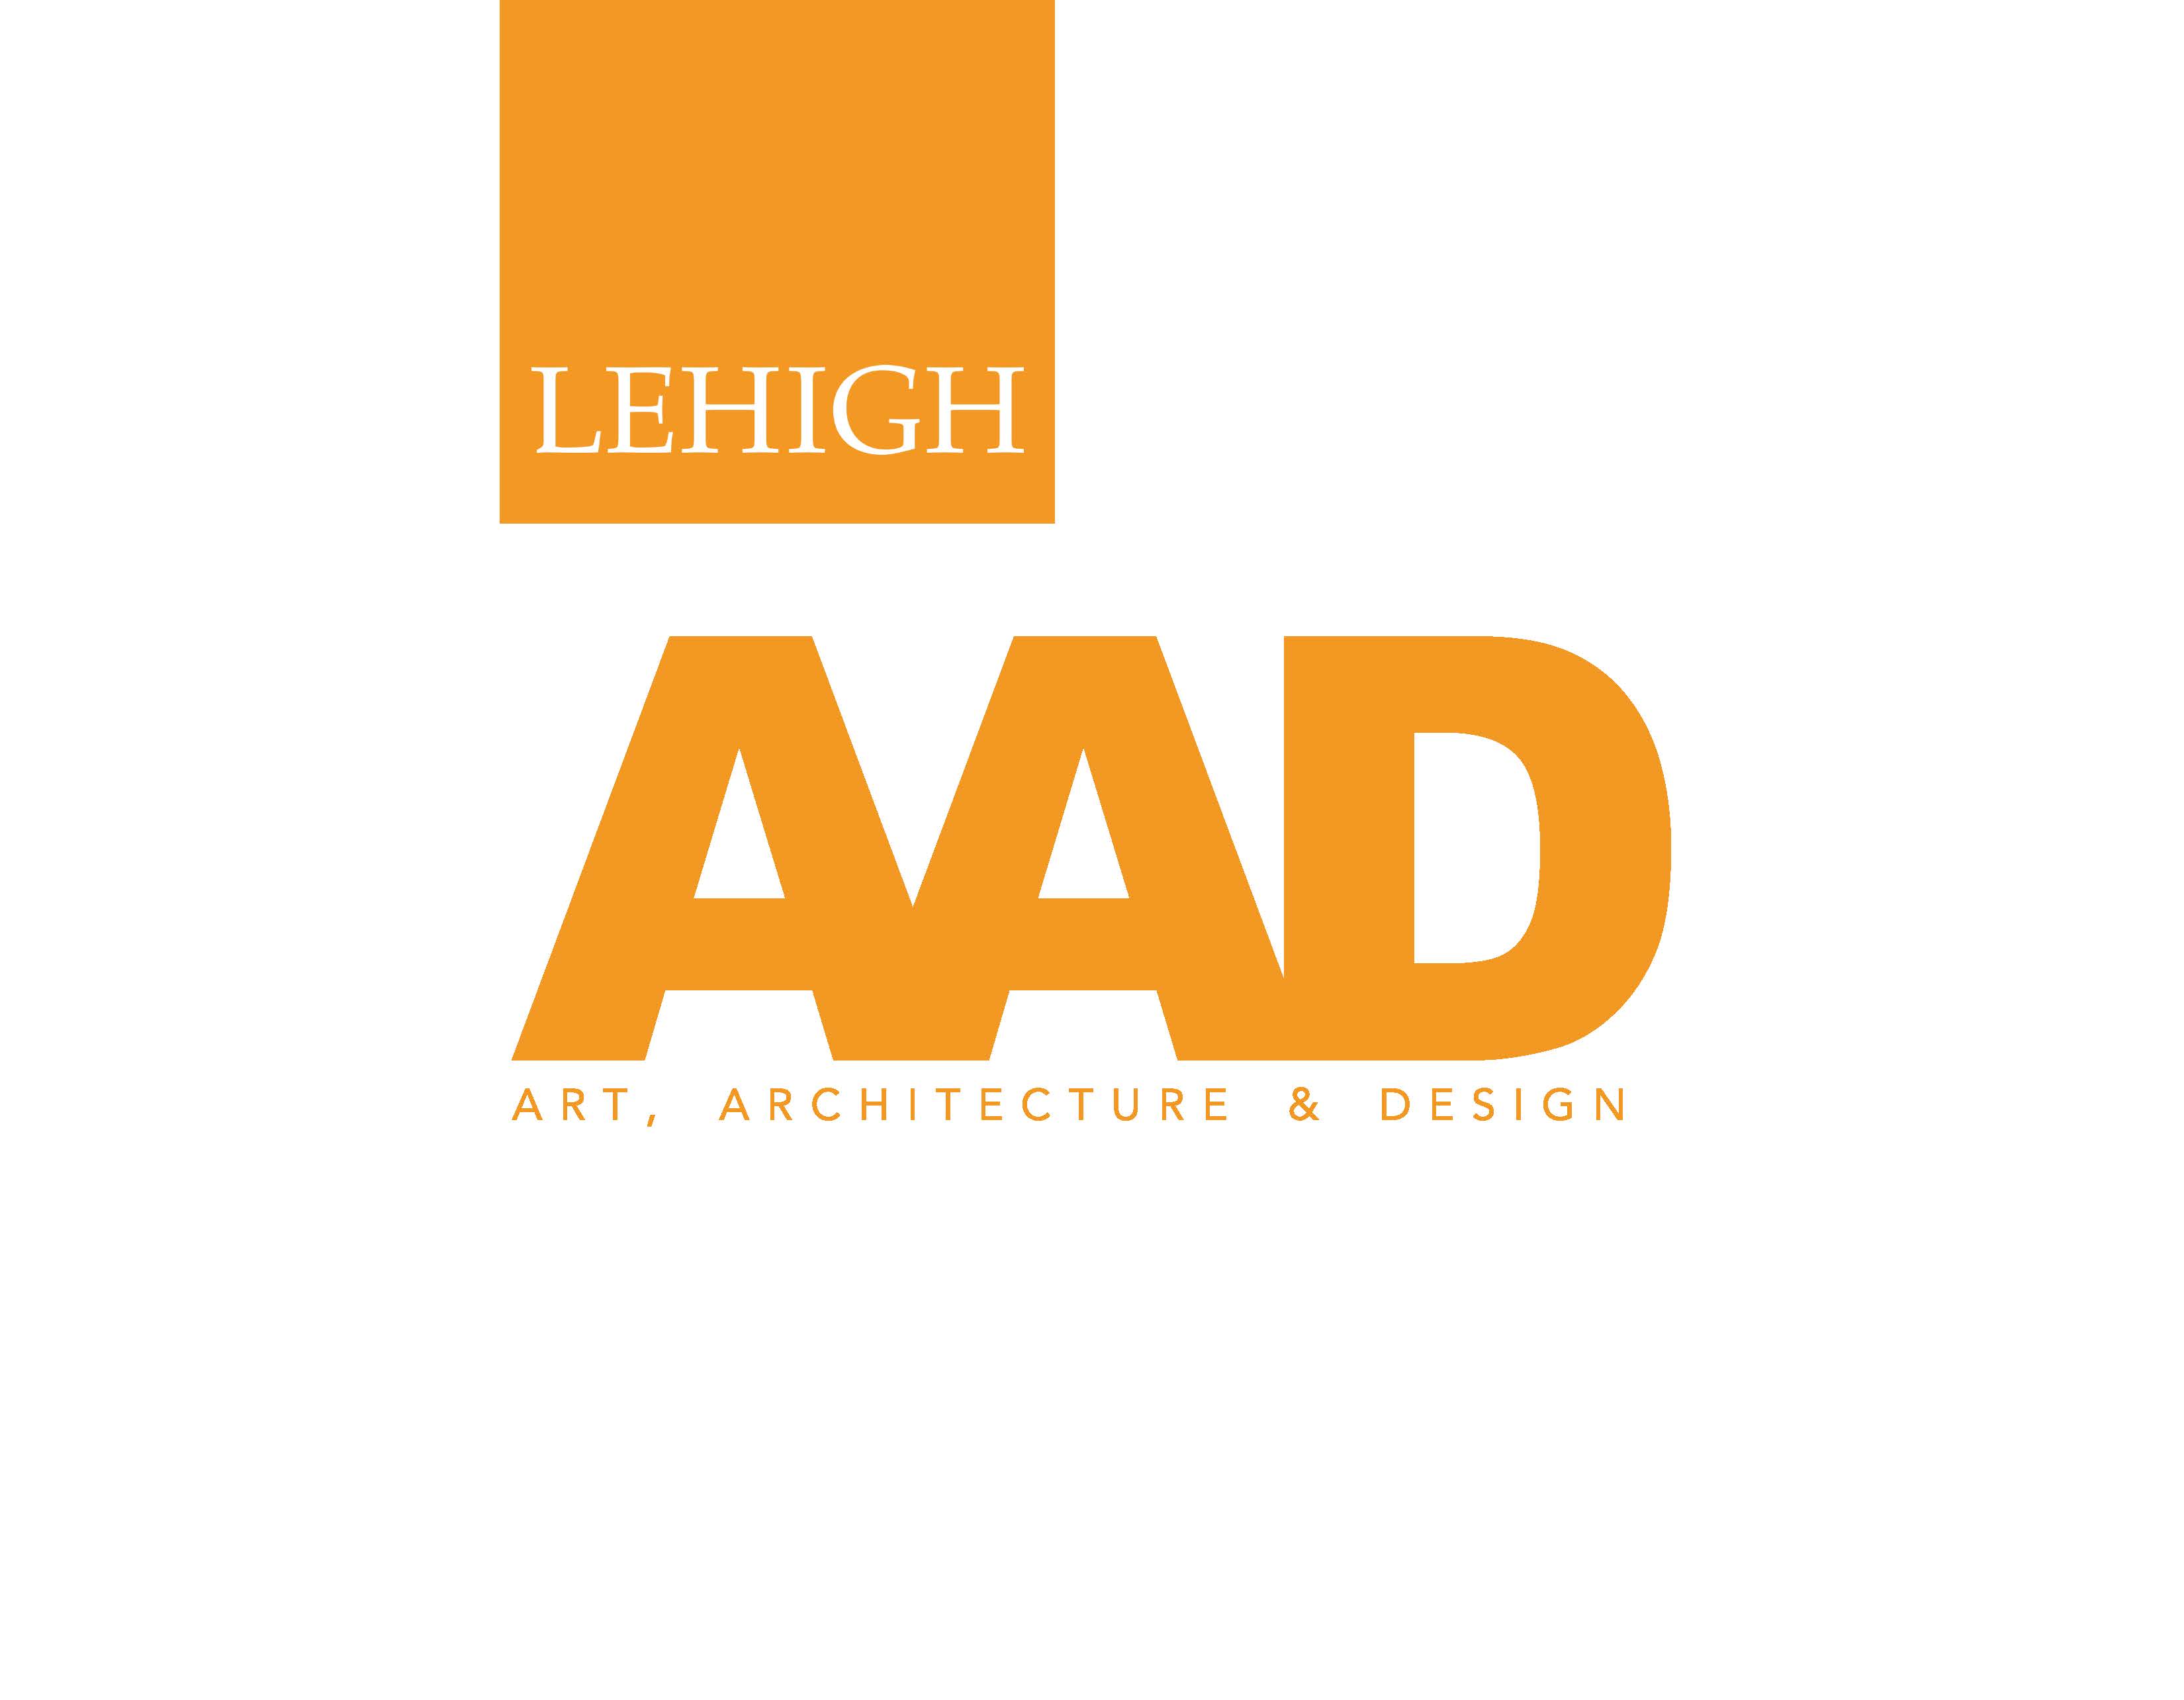 Lehigh University and AAD alternate logo